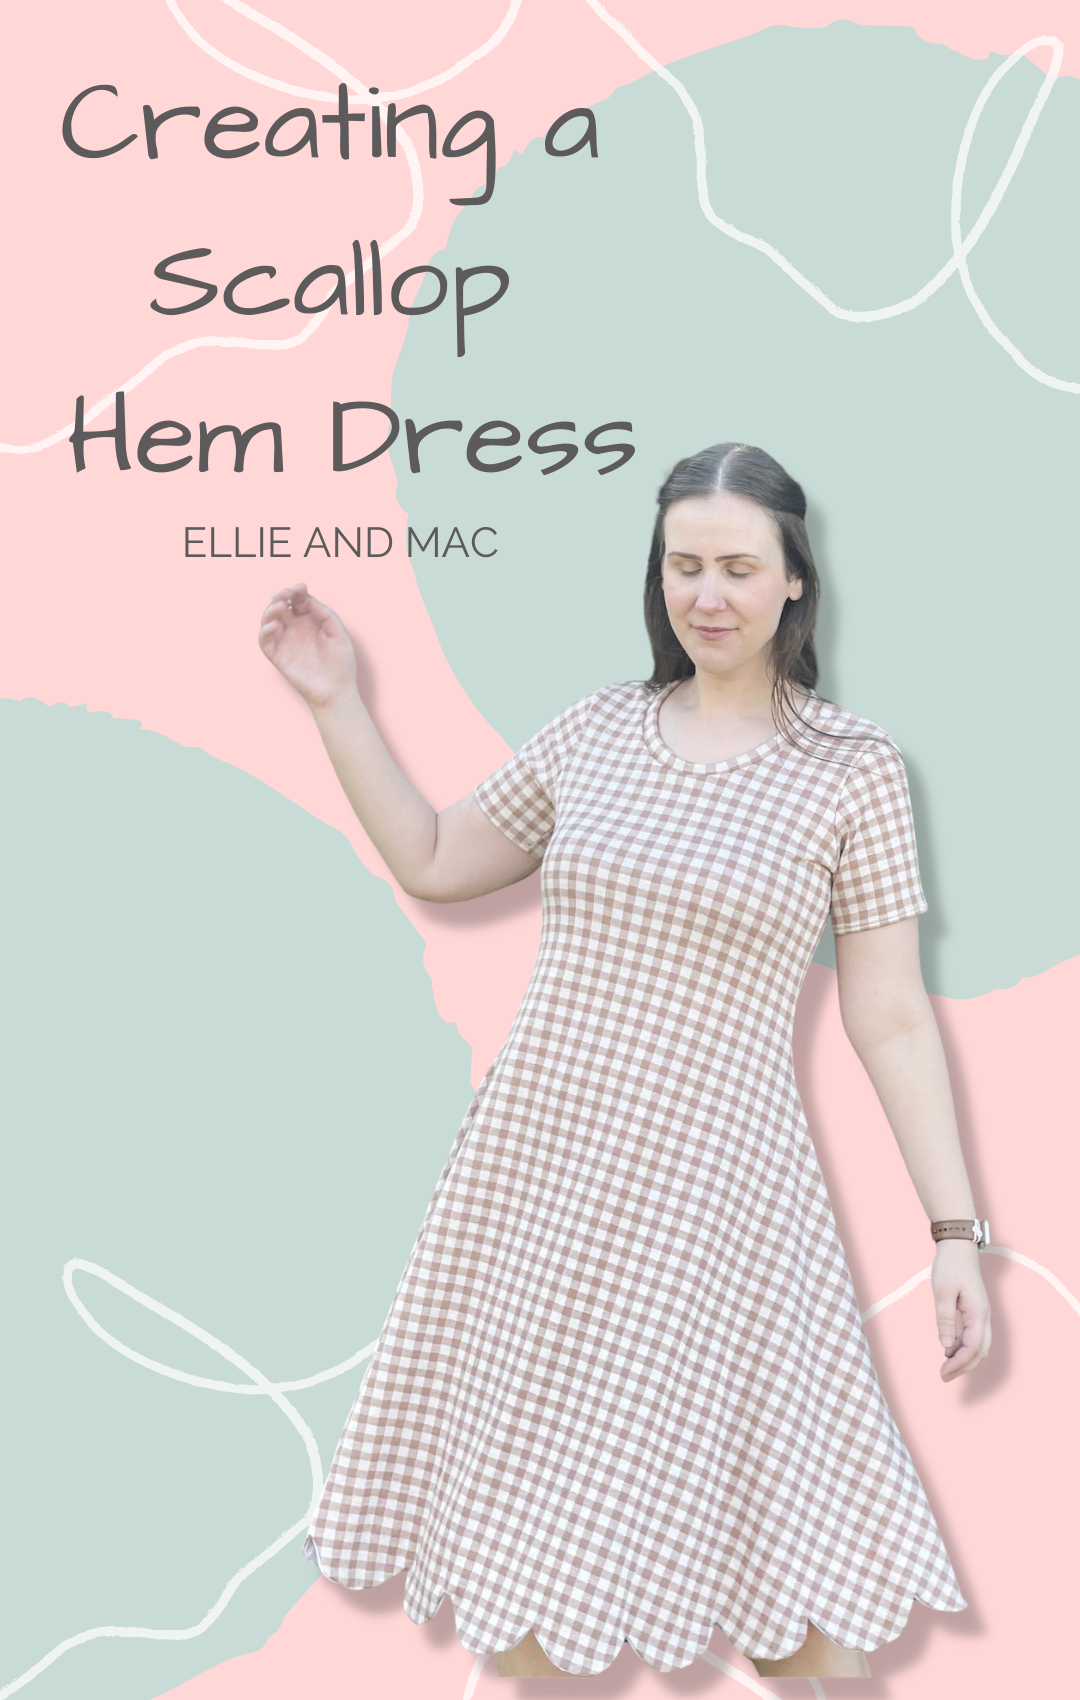 Creating a Scallop Hem Dress